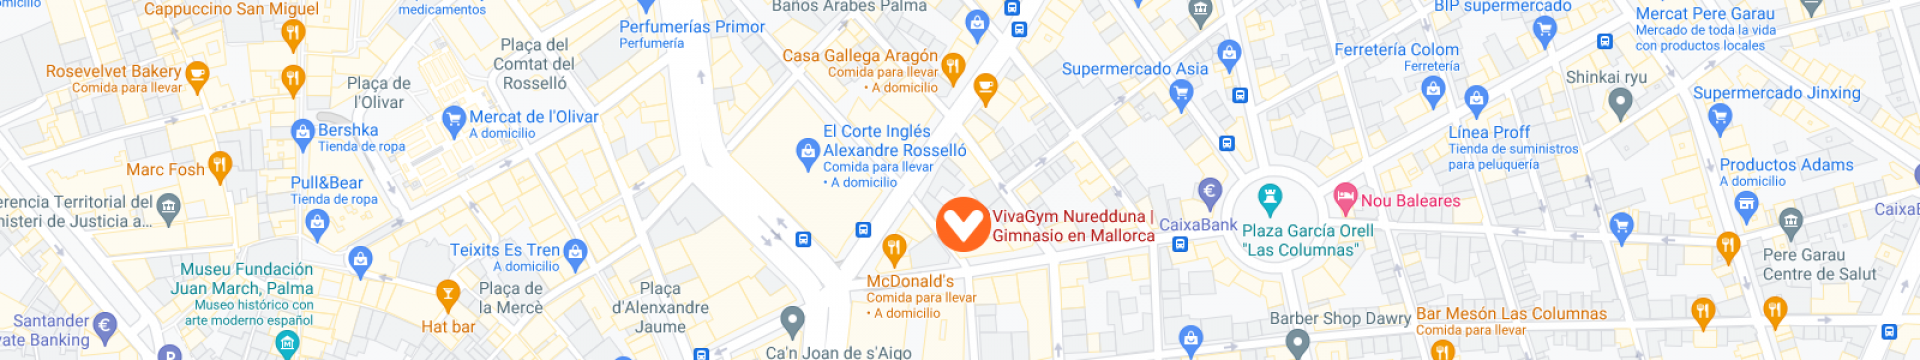 mapa vivagym nuredduna